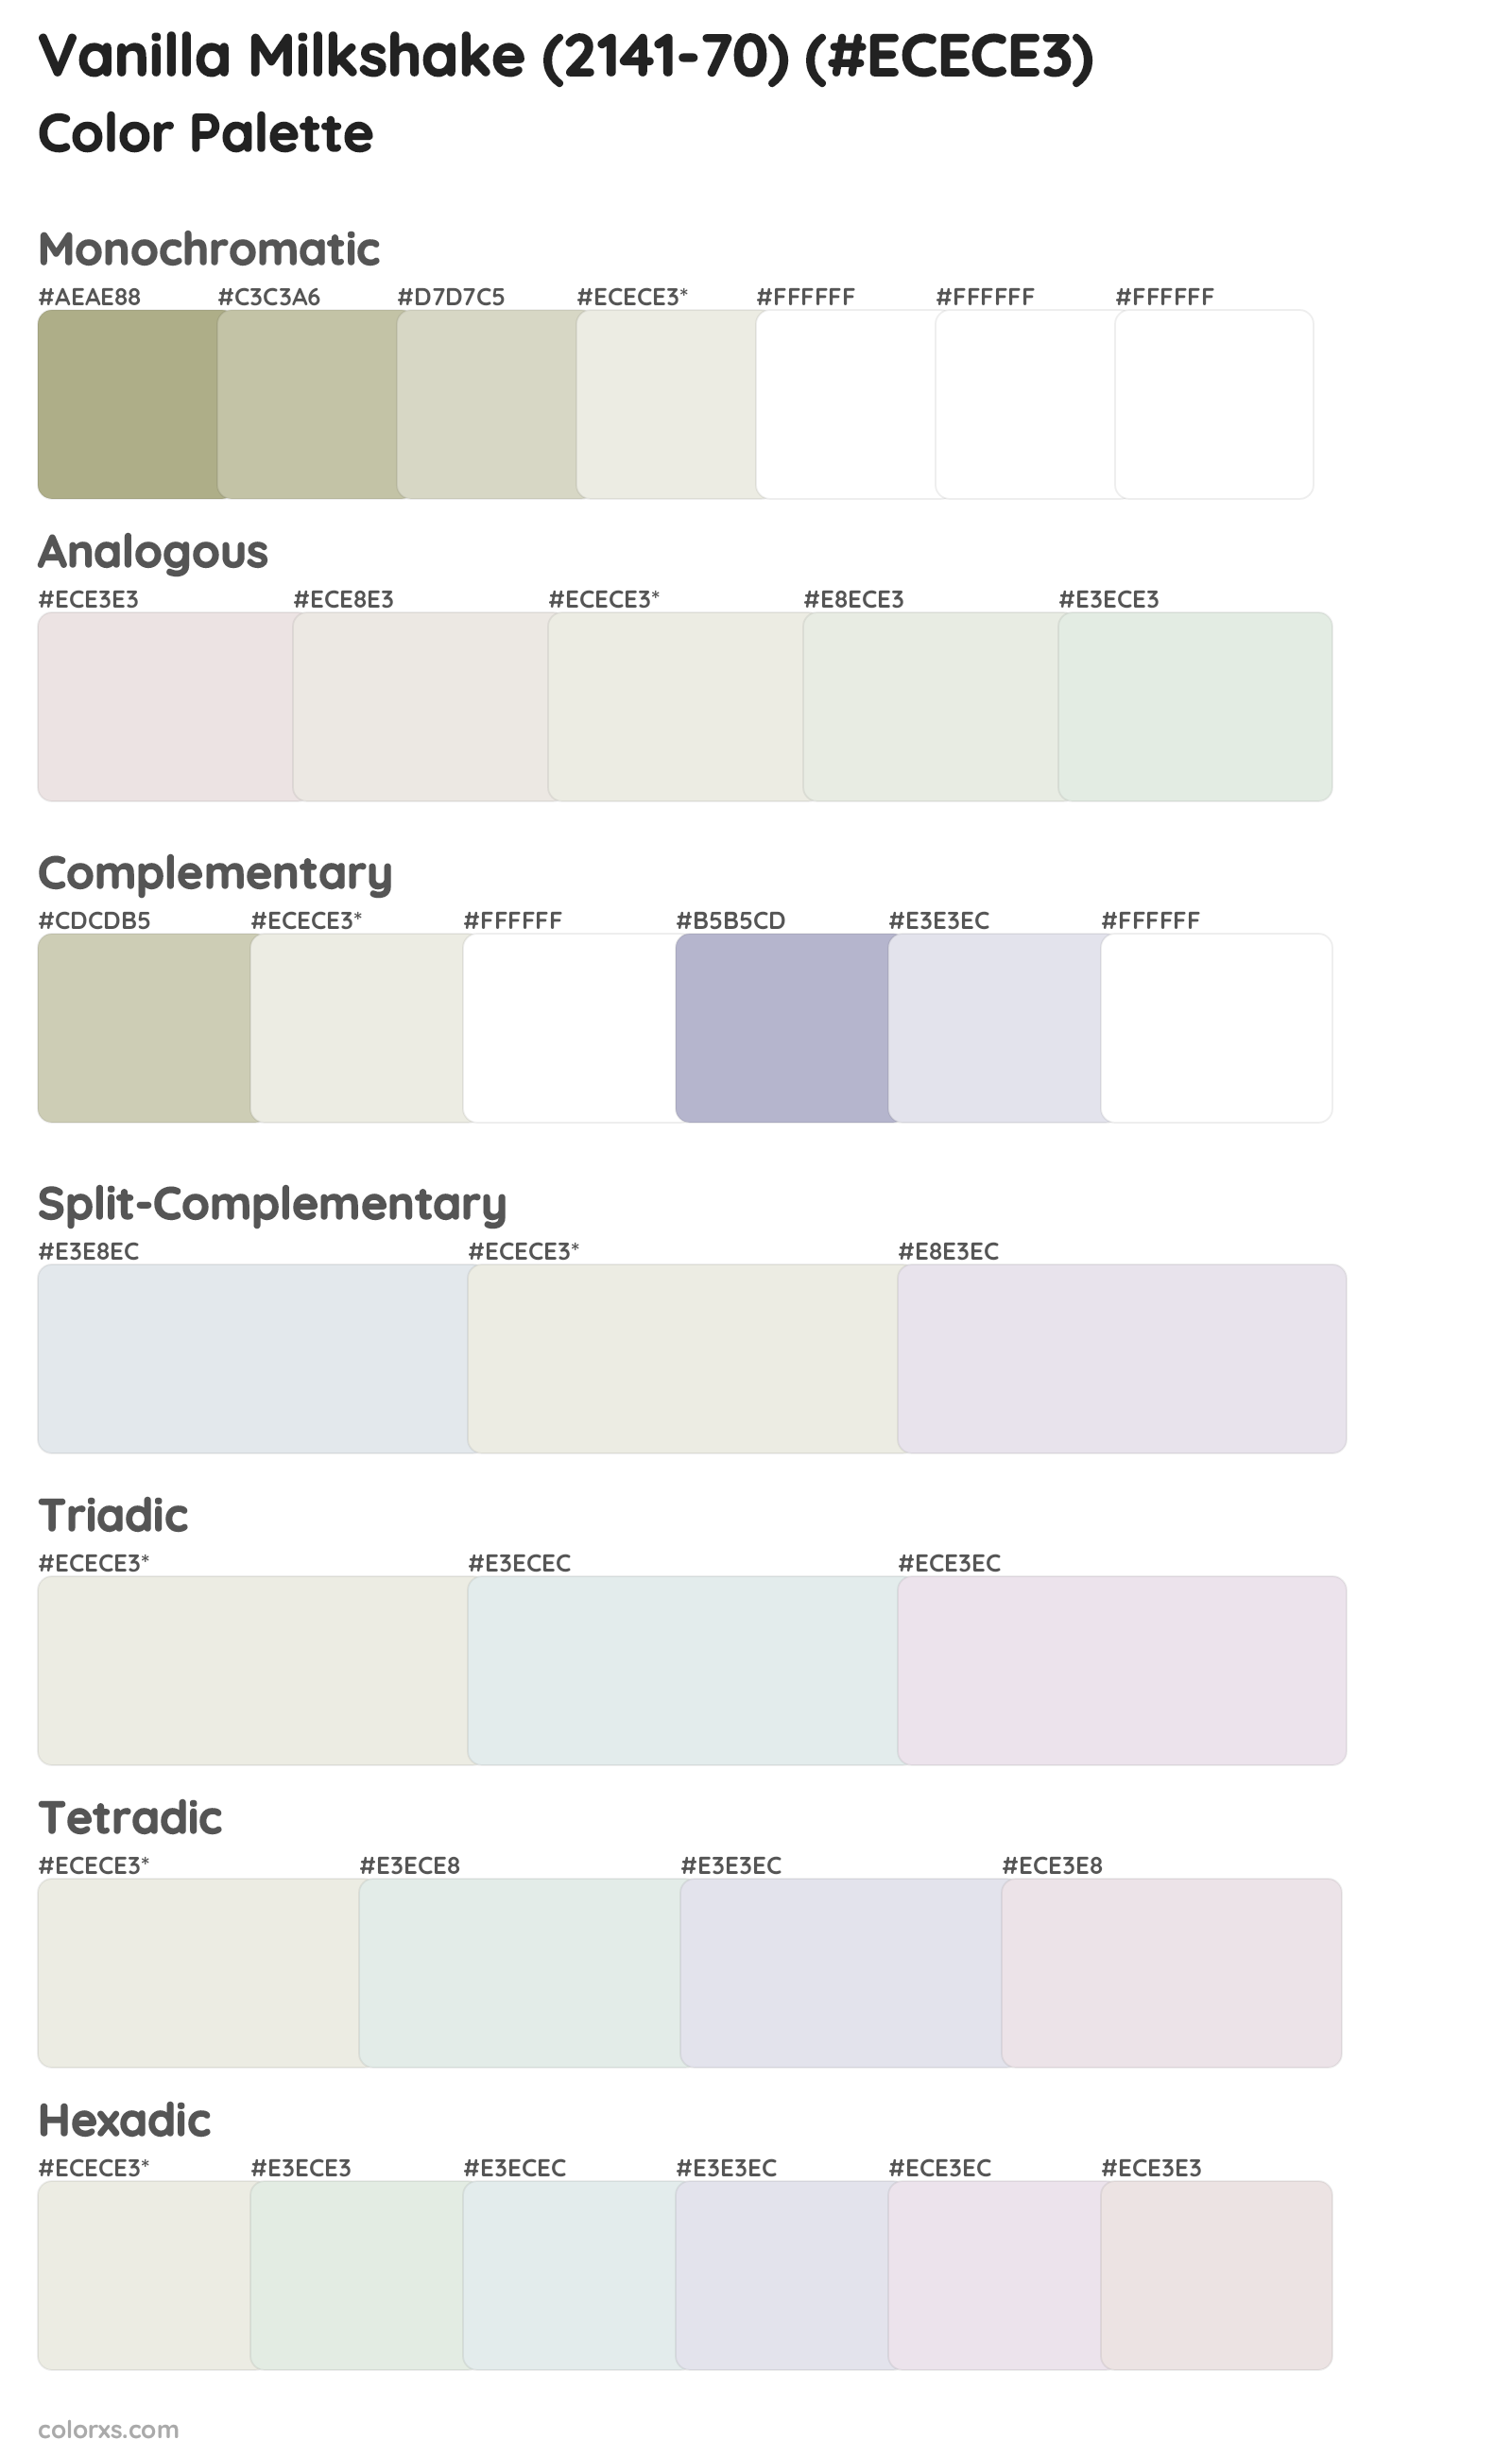 Vanilla Milkshake (2141-70) Color Scheme Palettes